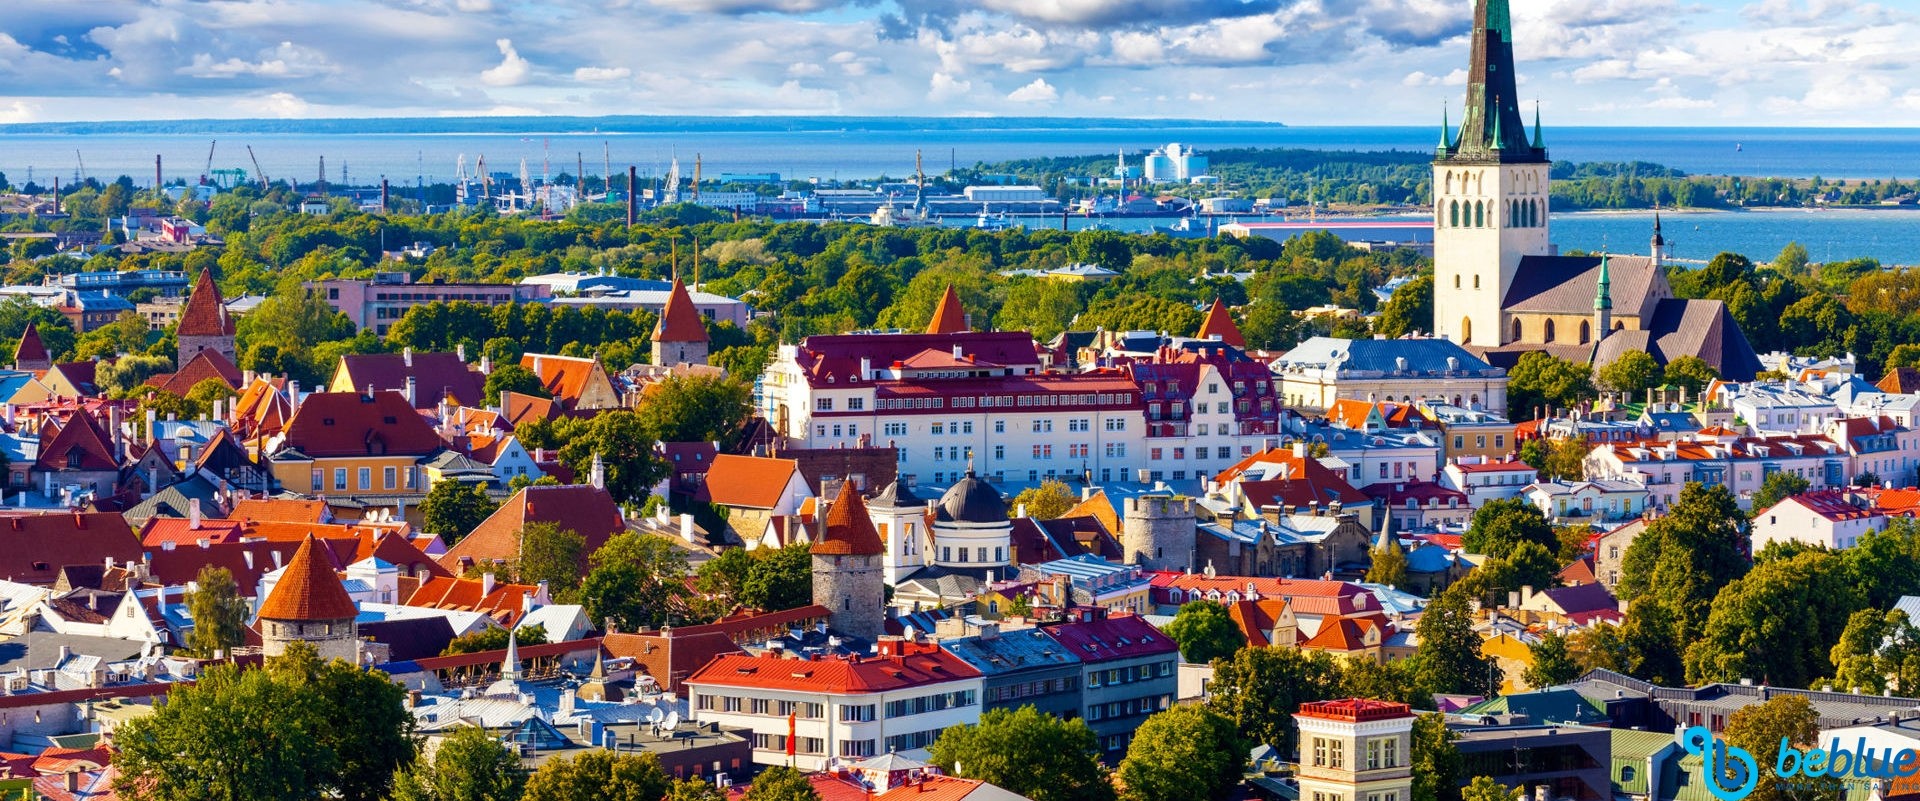 Sailing cruise from Tallinn, Estonia